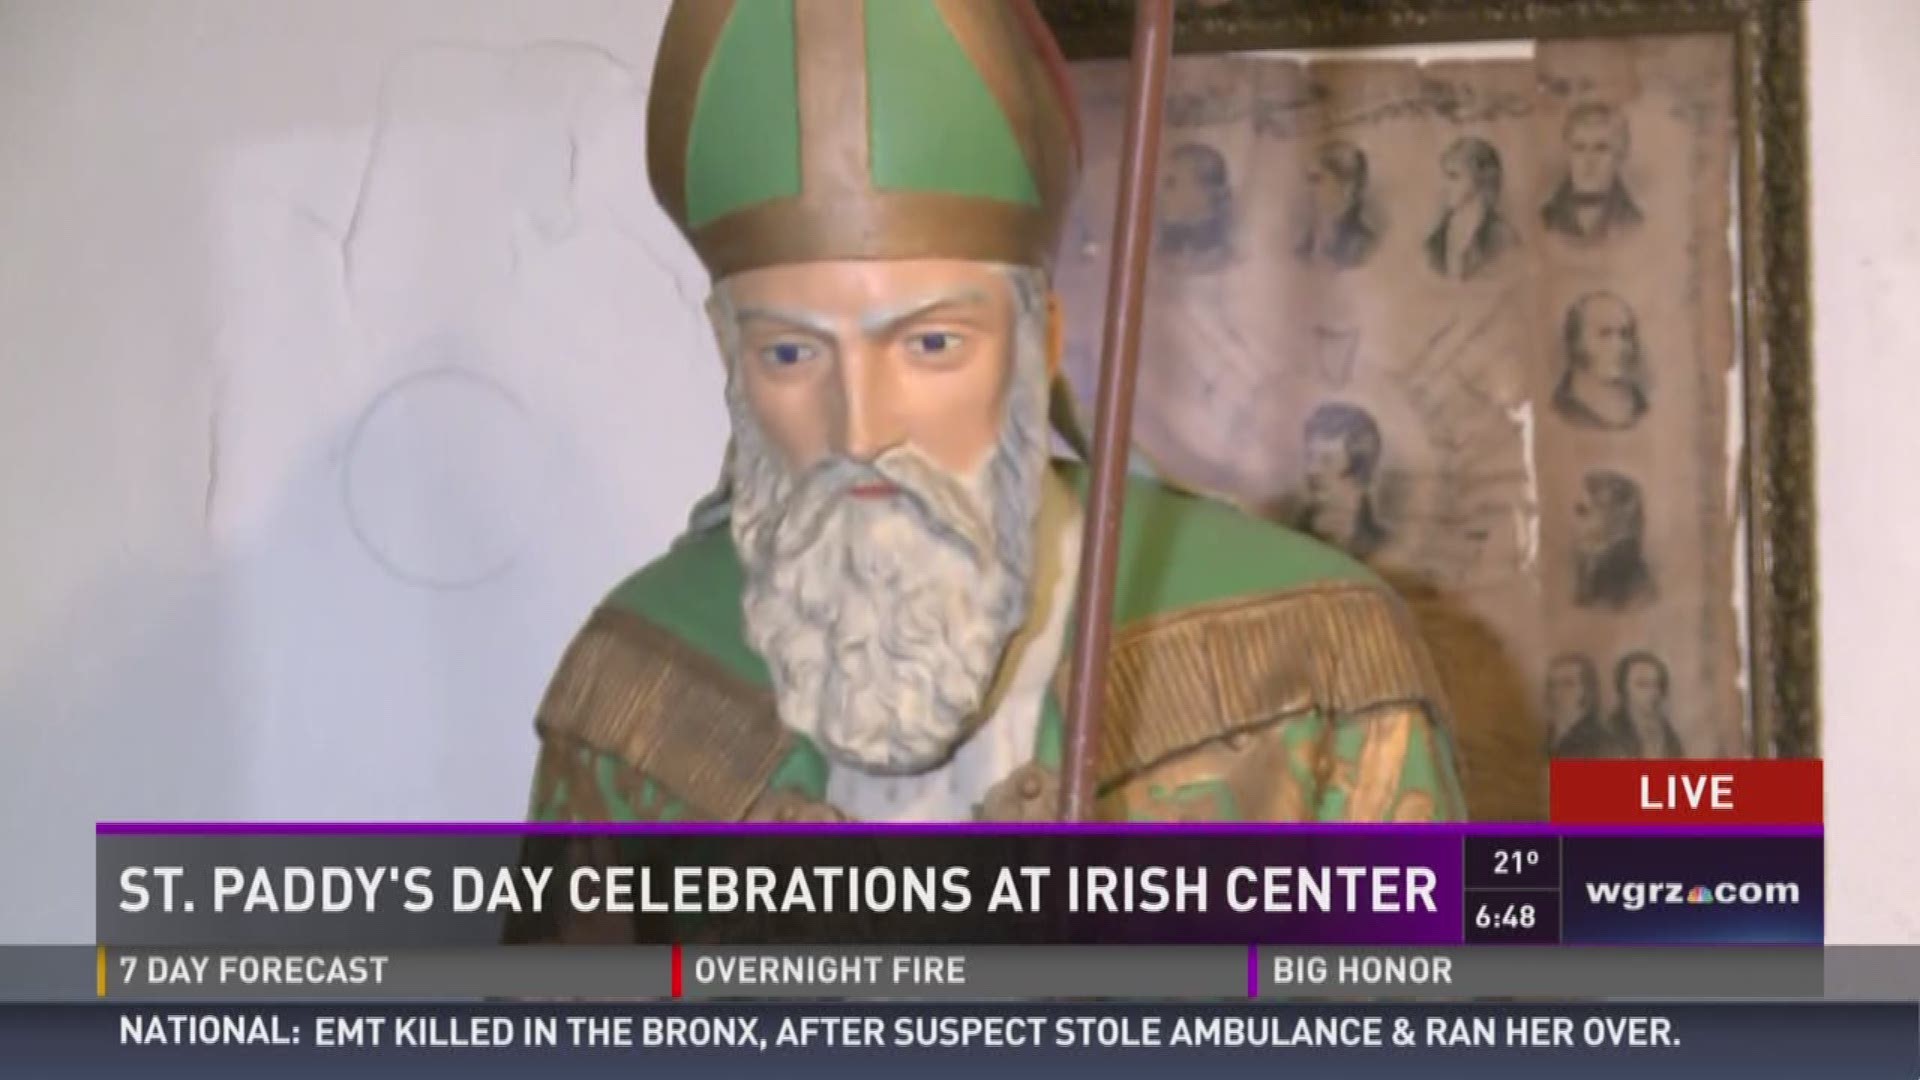 Daybreak's Pete Gallivan celebrate's Buffalo's rich Irish history & geneology at the Buffalo Irish Center for St. Patrick's Day